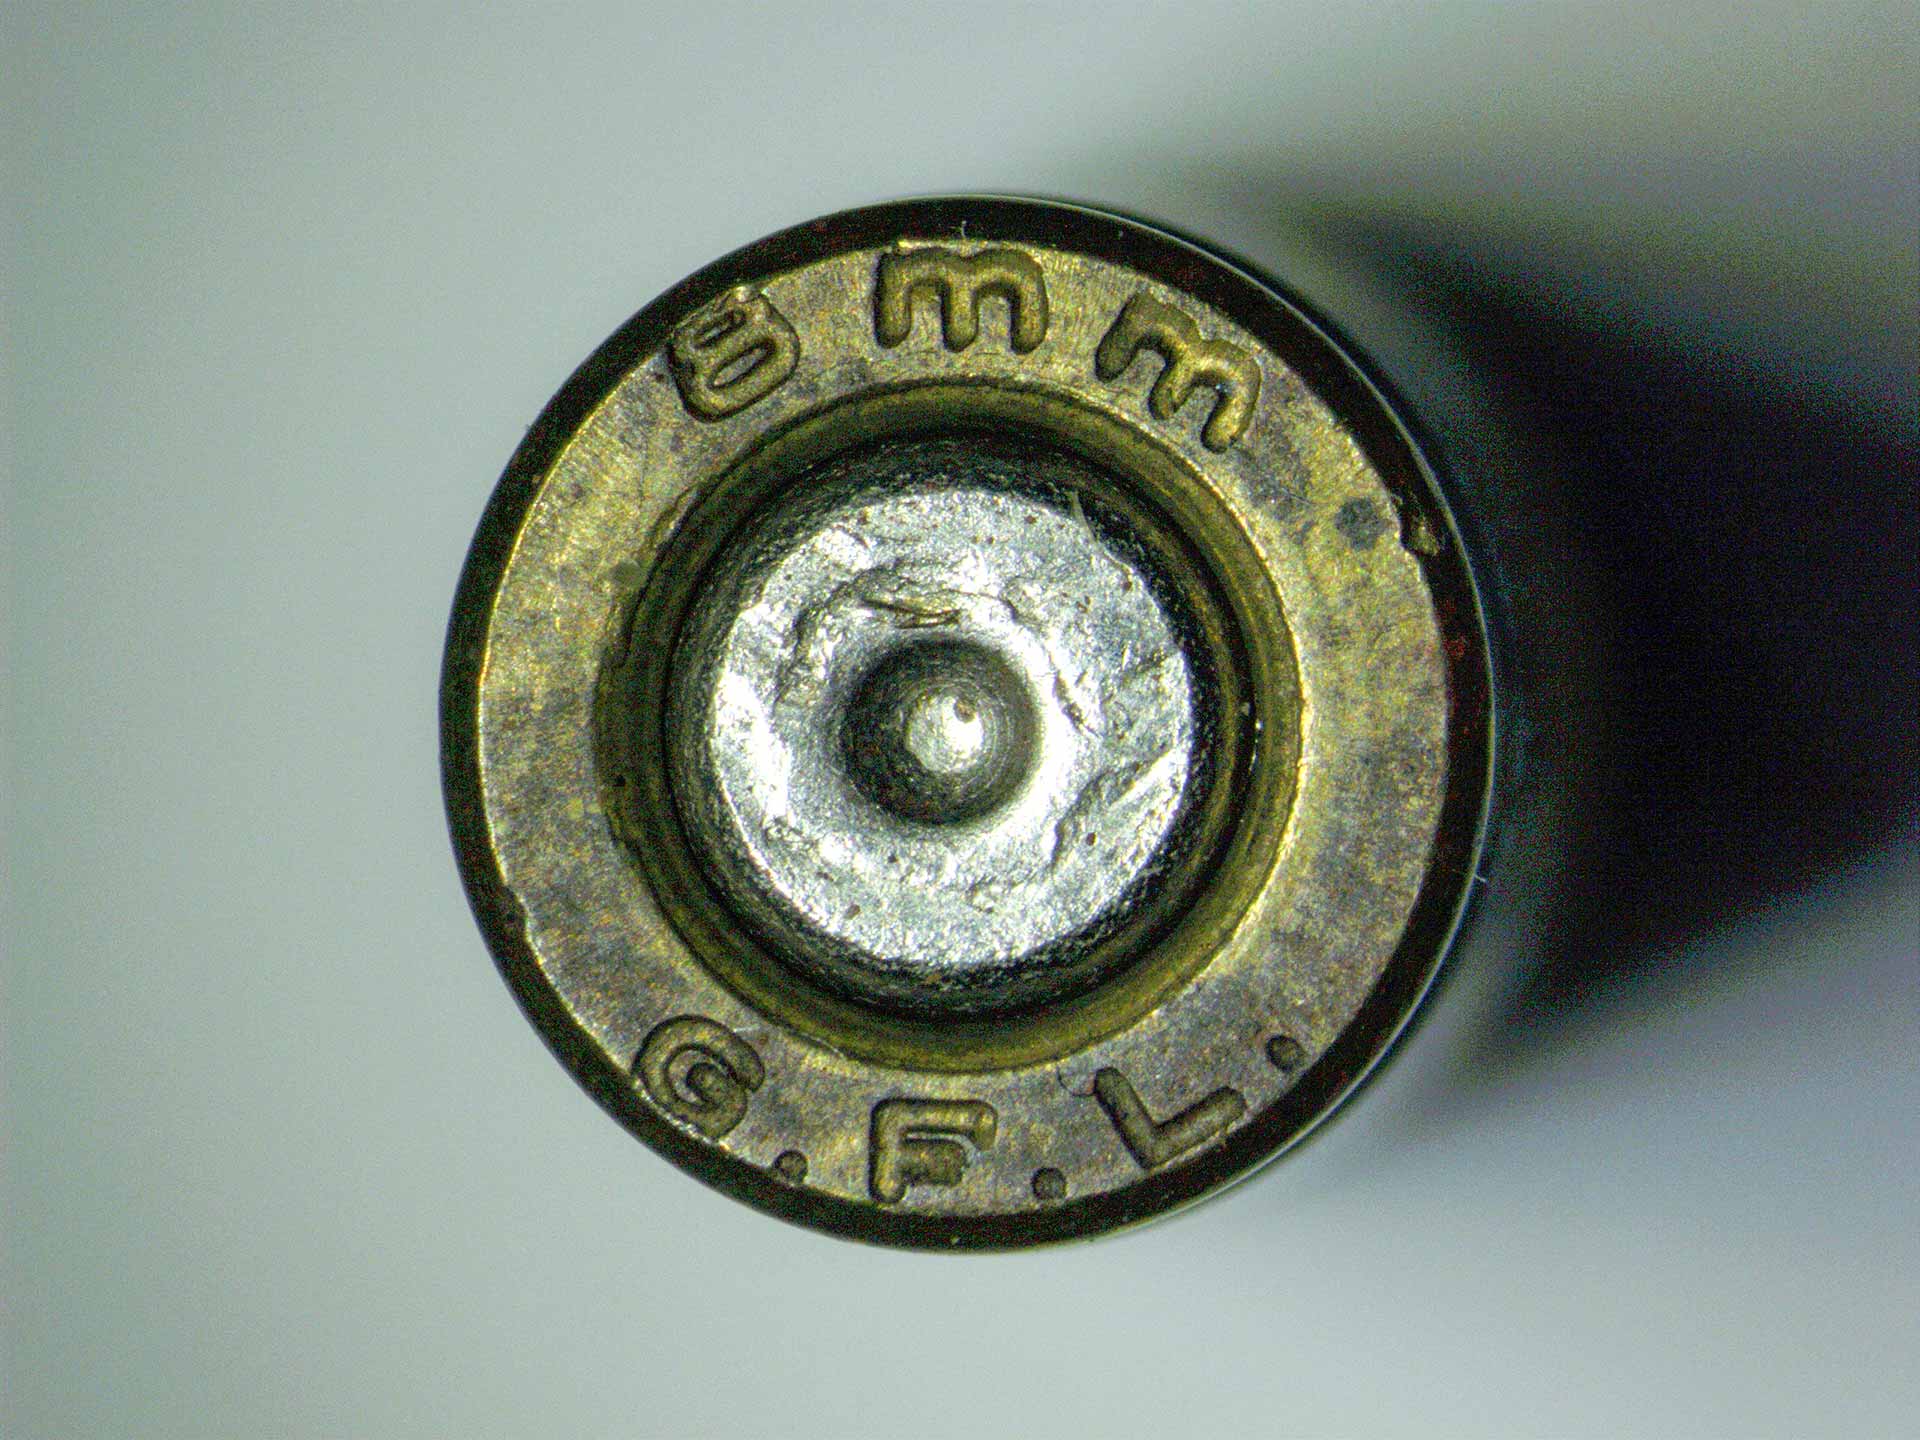 Casquillo de bala, imagen captada con ZEISS Stemi 508, anillo de luz, cuarto de círculo izquierdo